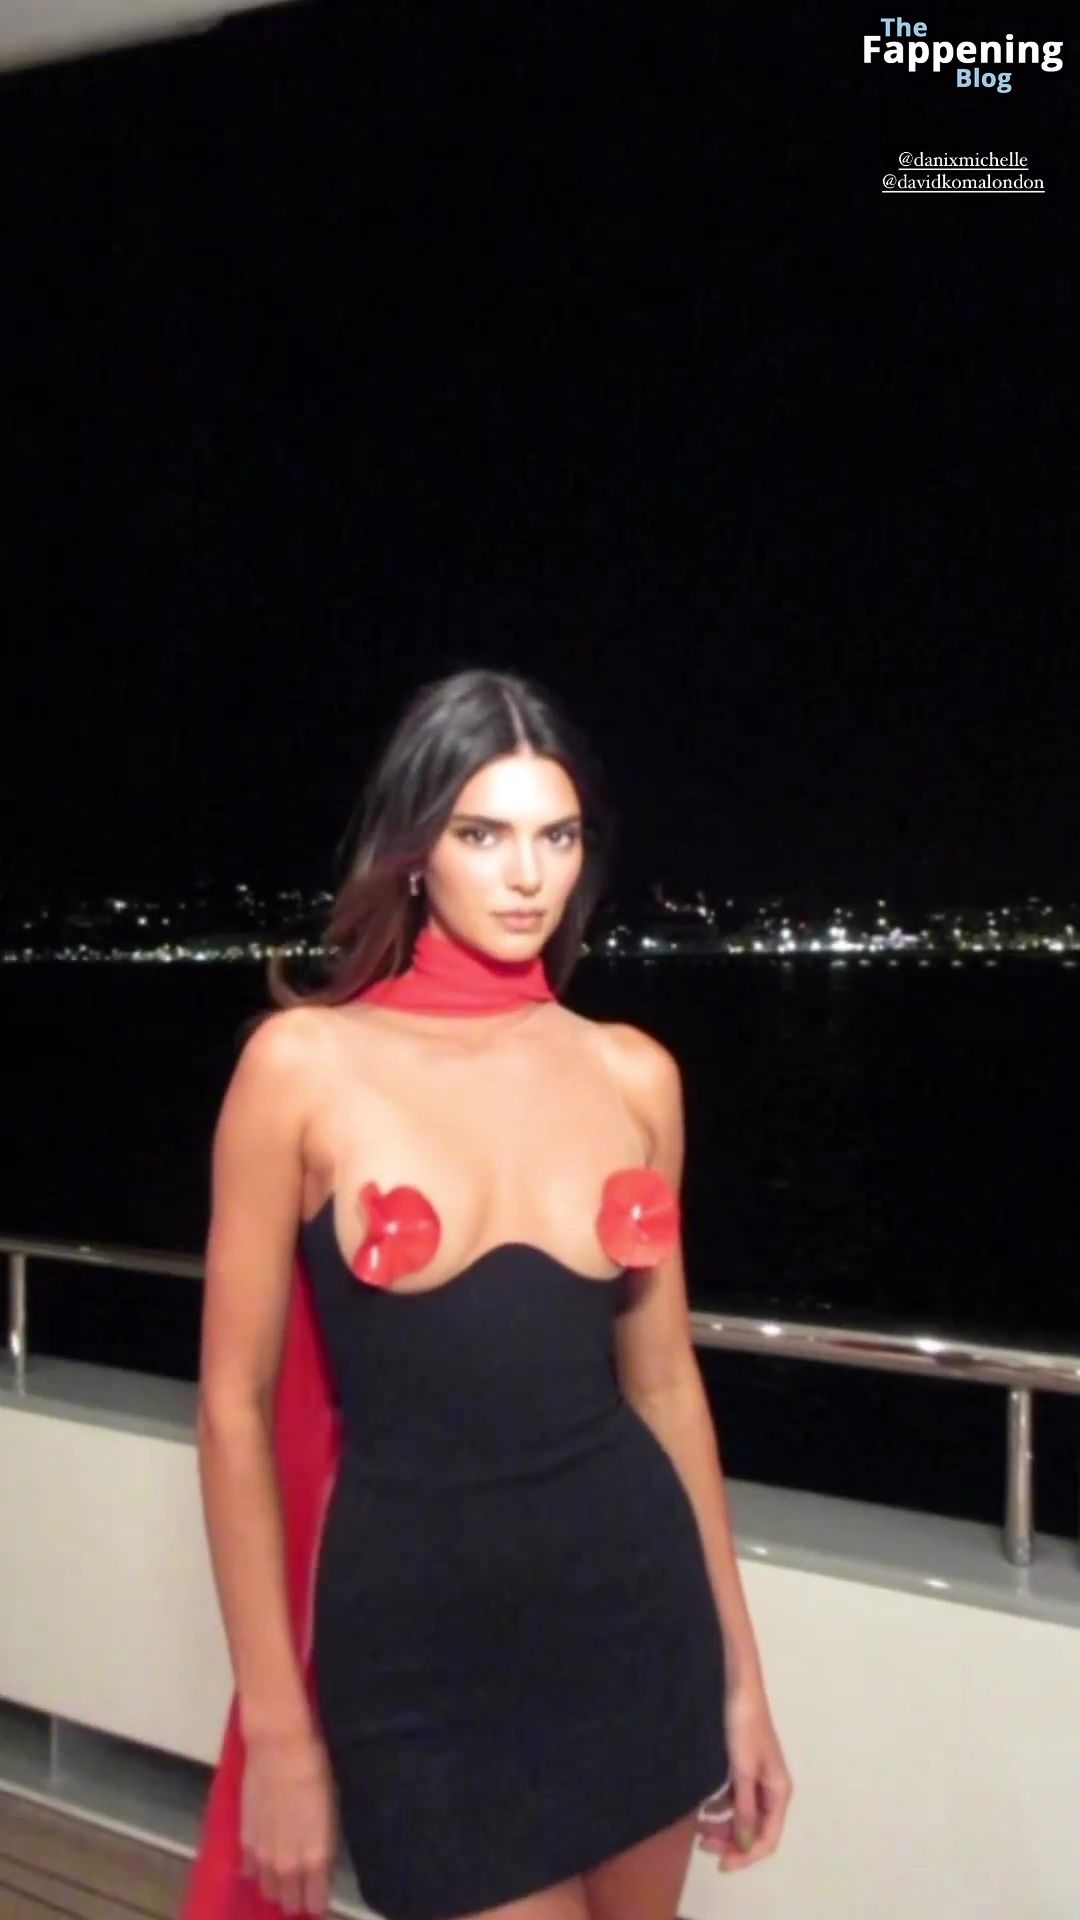 Kendall-Jenner-Topless-The-Fappening-Blog-4-1.jpg